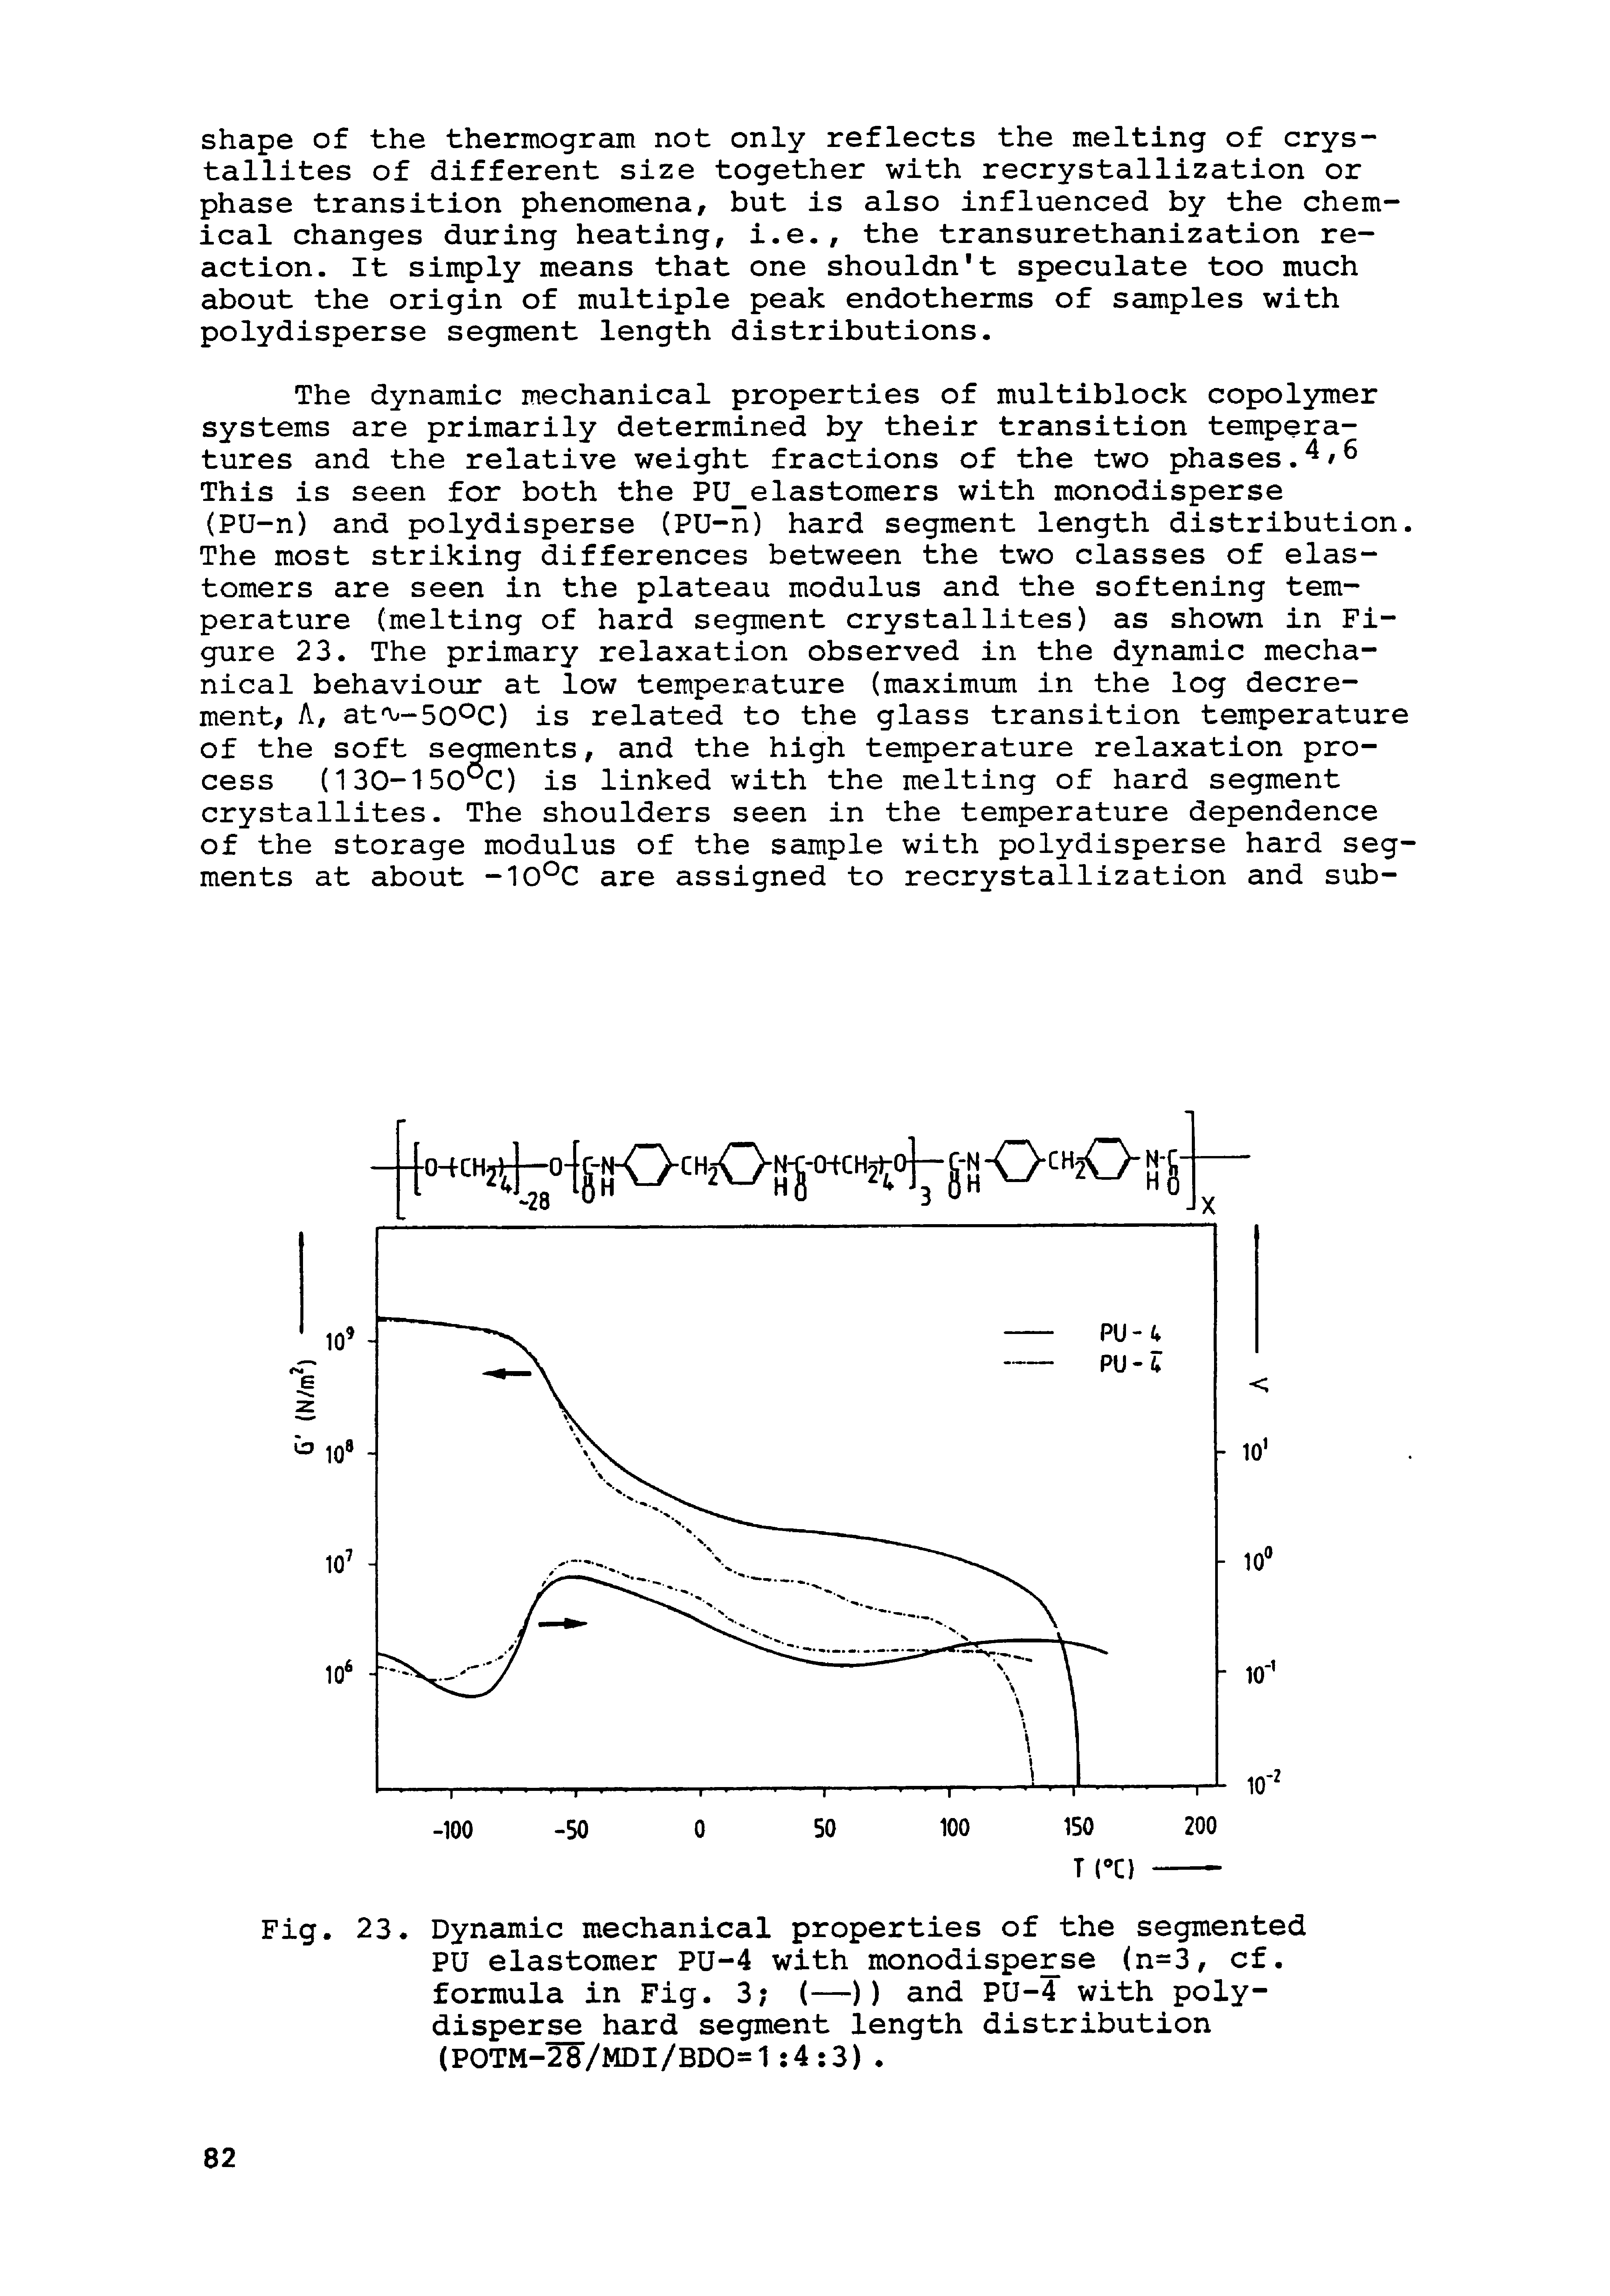 Fig. 23. Dynamic mechanical properties of the segmented PU elastomer PU-4 with monodisperse (n=3, cf. formula in Fig. 3 (—)) and PU-4 with poly-disperse hard segment length distribution (POTM-28/MDI/BDO=1 4 3).